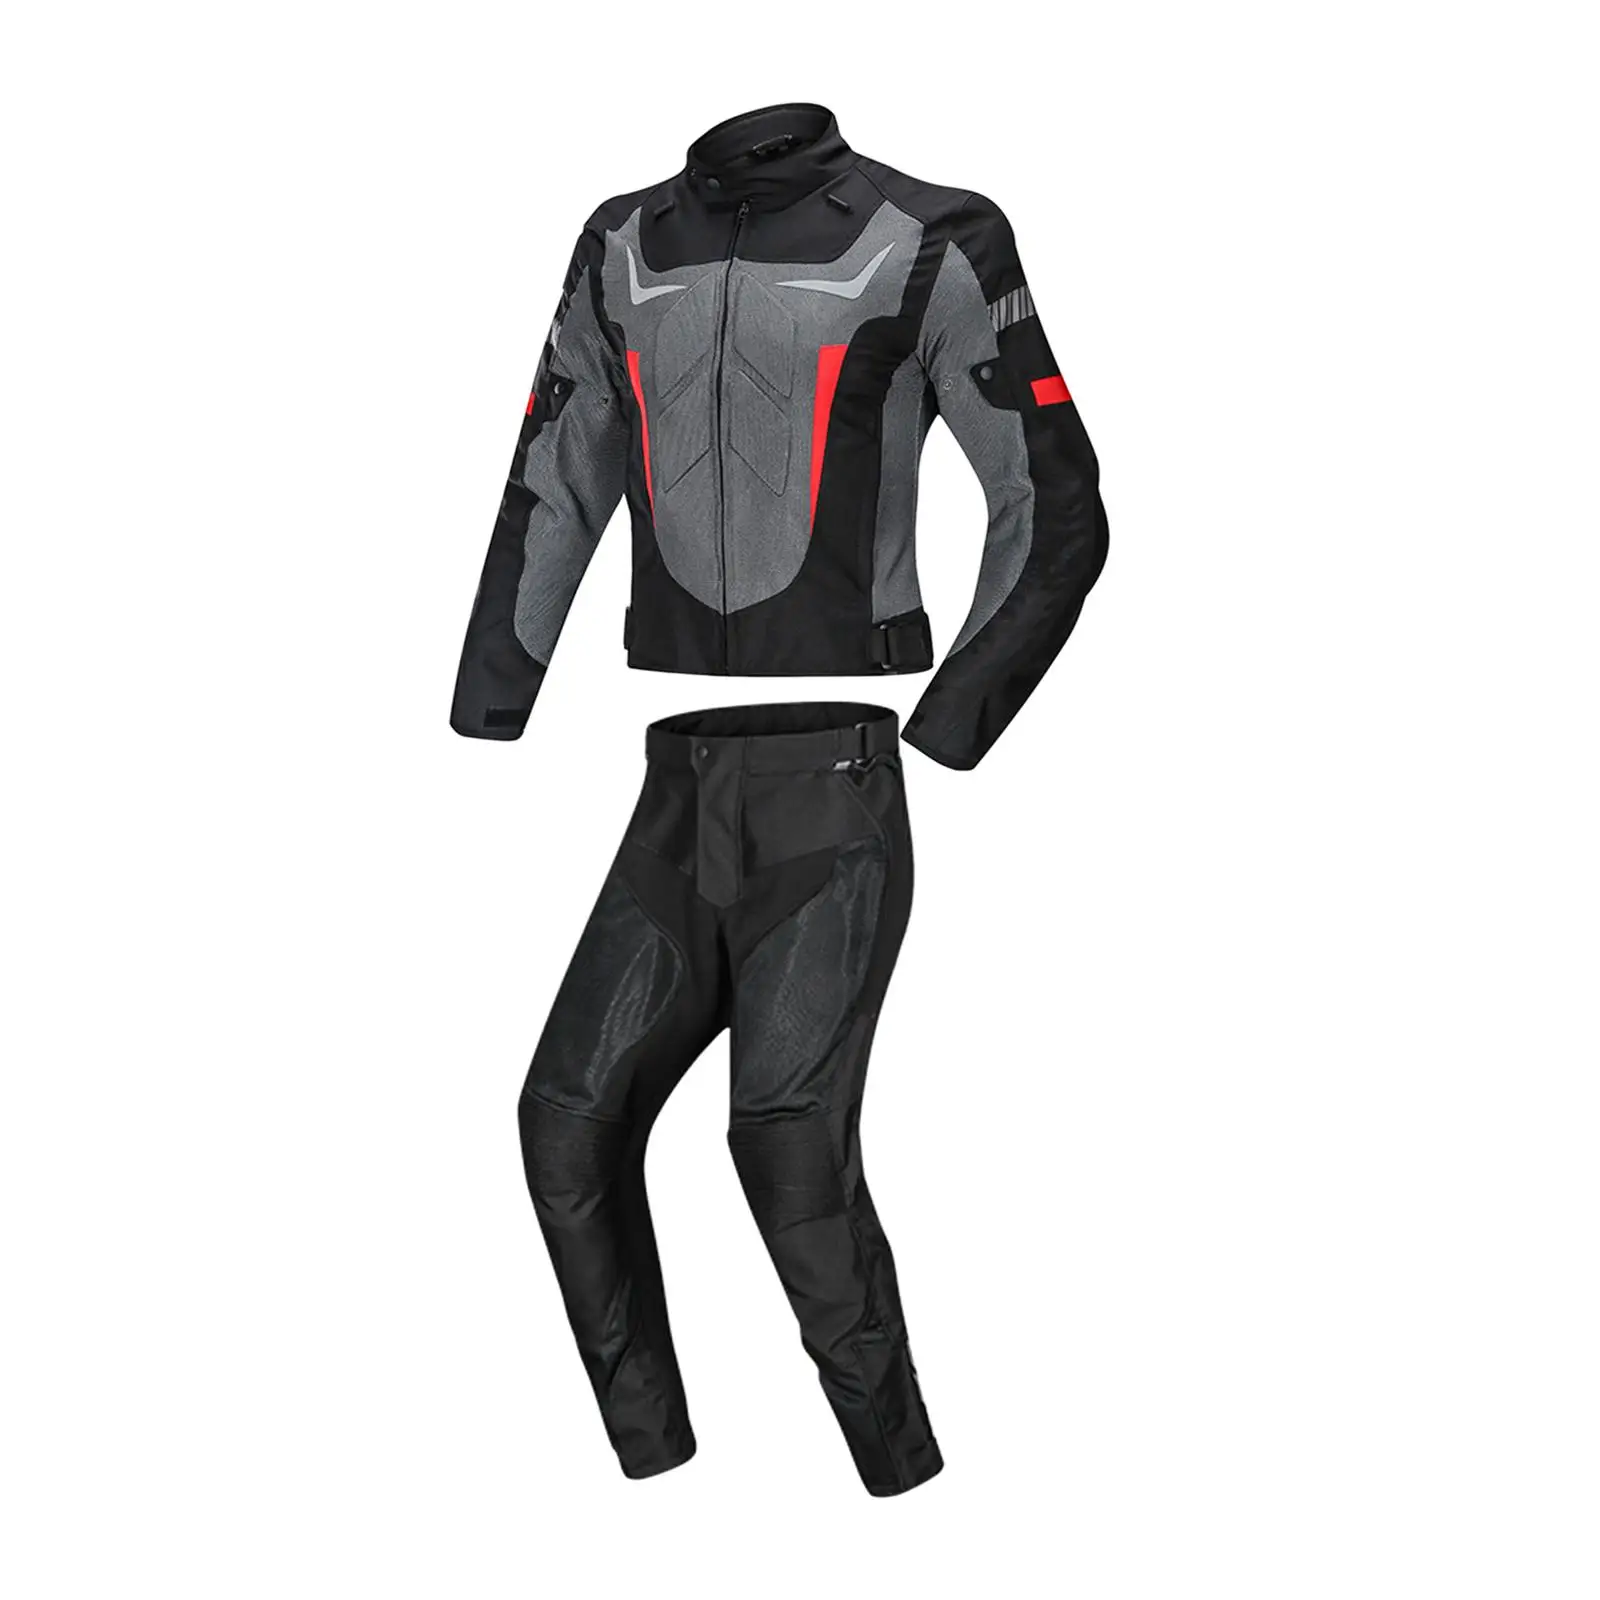 Motorcycle Jacket Pants Suit, Motorcycle Jacket Wearable Riding Protection, Windproof Wearable Motorbike Riding Jacket